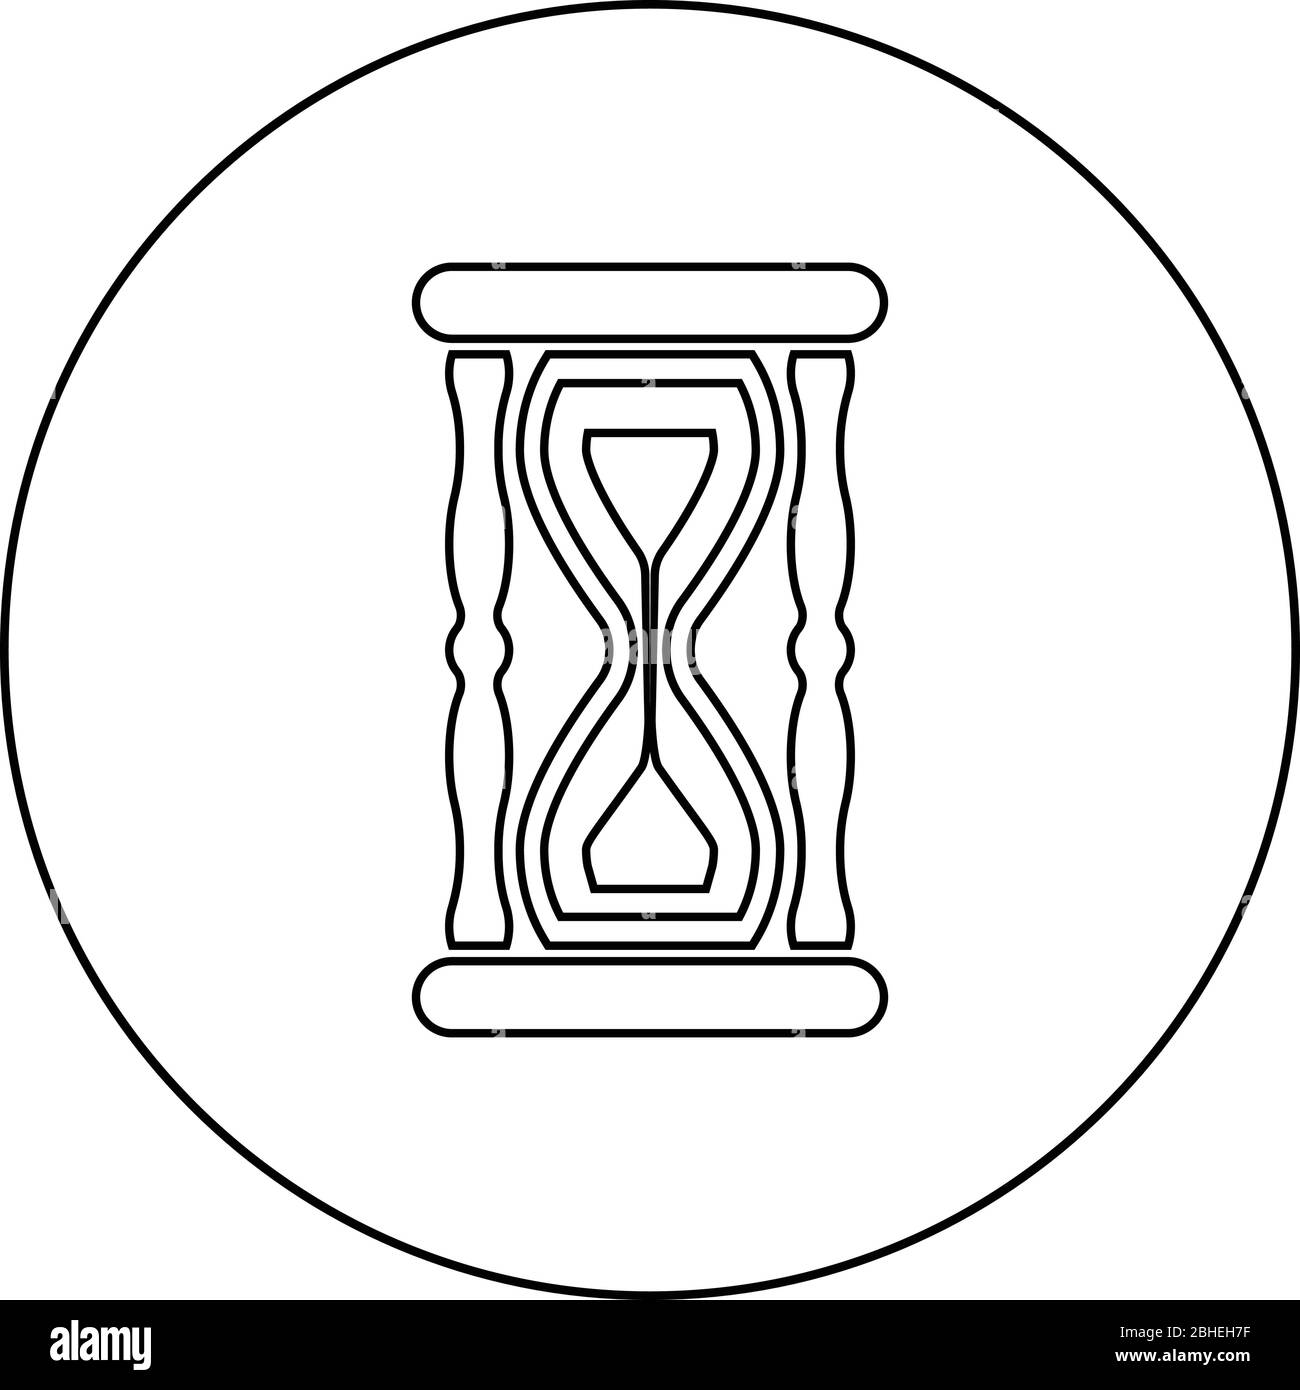 Sanduhr Sanduhr Symbol im Kreis runden Umriss schwarz Farbe Vektor Illustration flach Stil einfaches Bild Stock Vektor